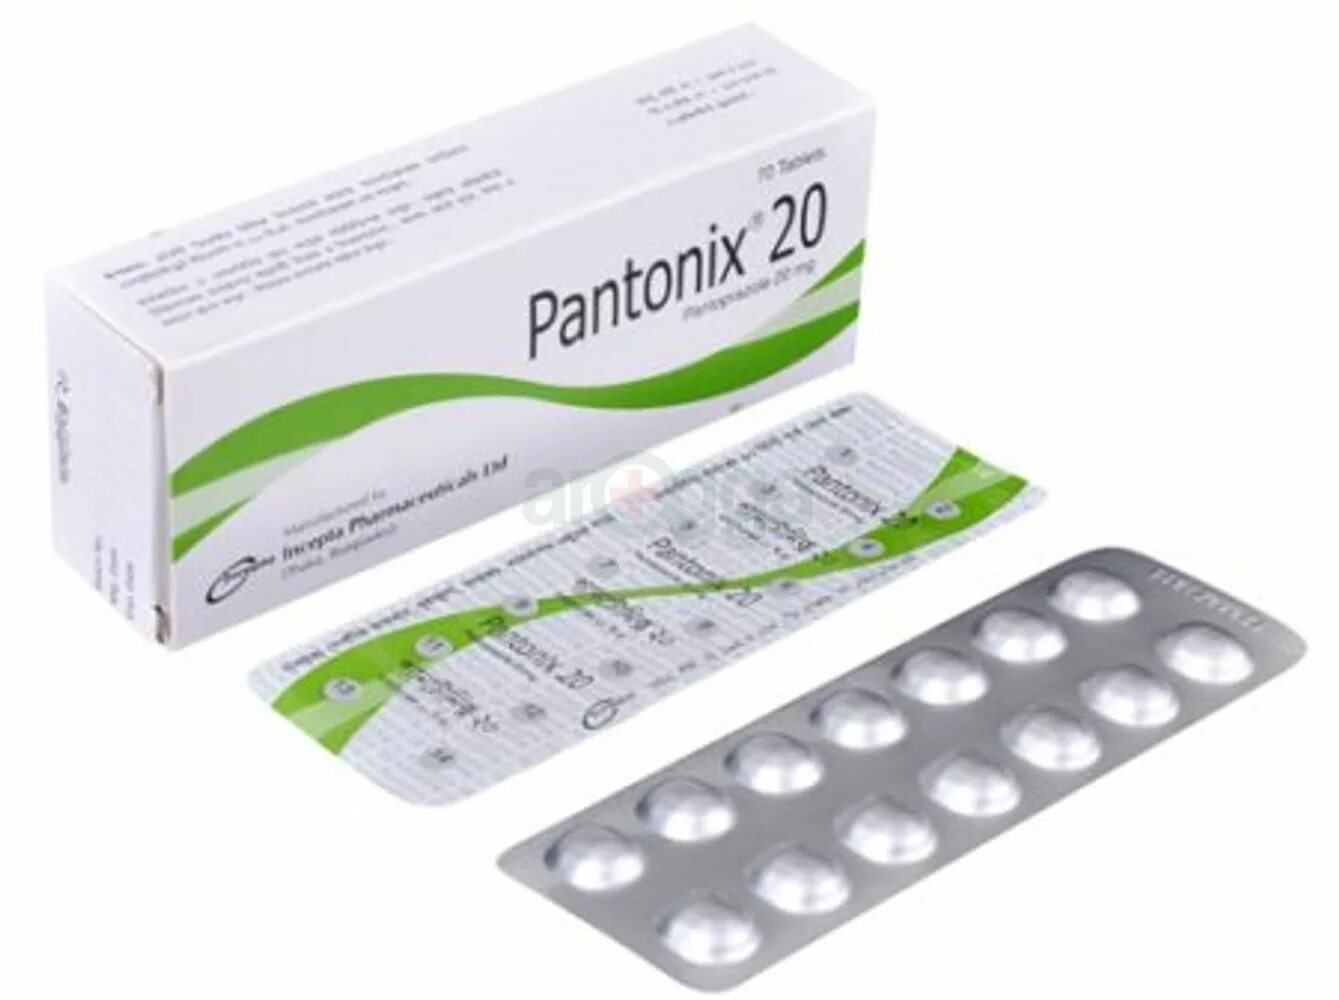 20 мг в гр. Пантомед таблетка. Pantomed 40 MG. Рабоникс 20 мг. РАБЕПРОКС 20 мг.